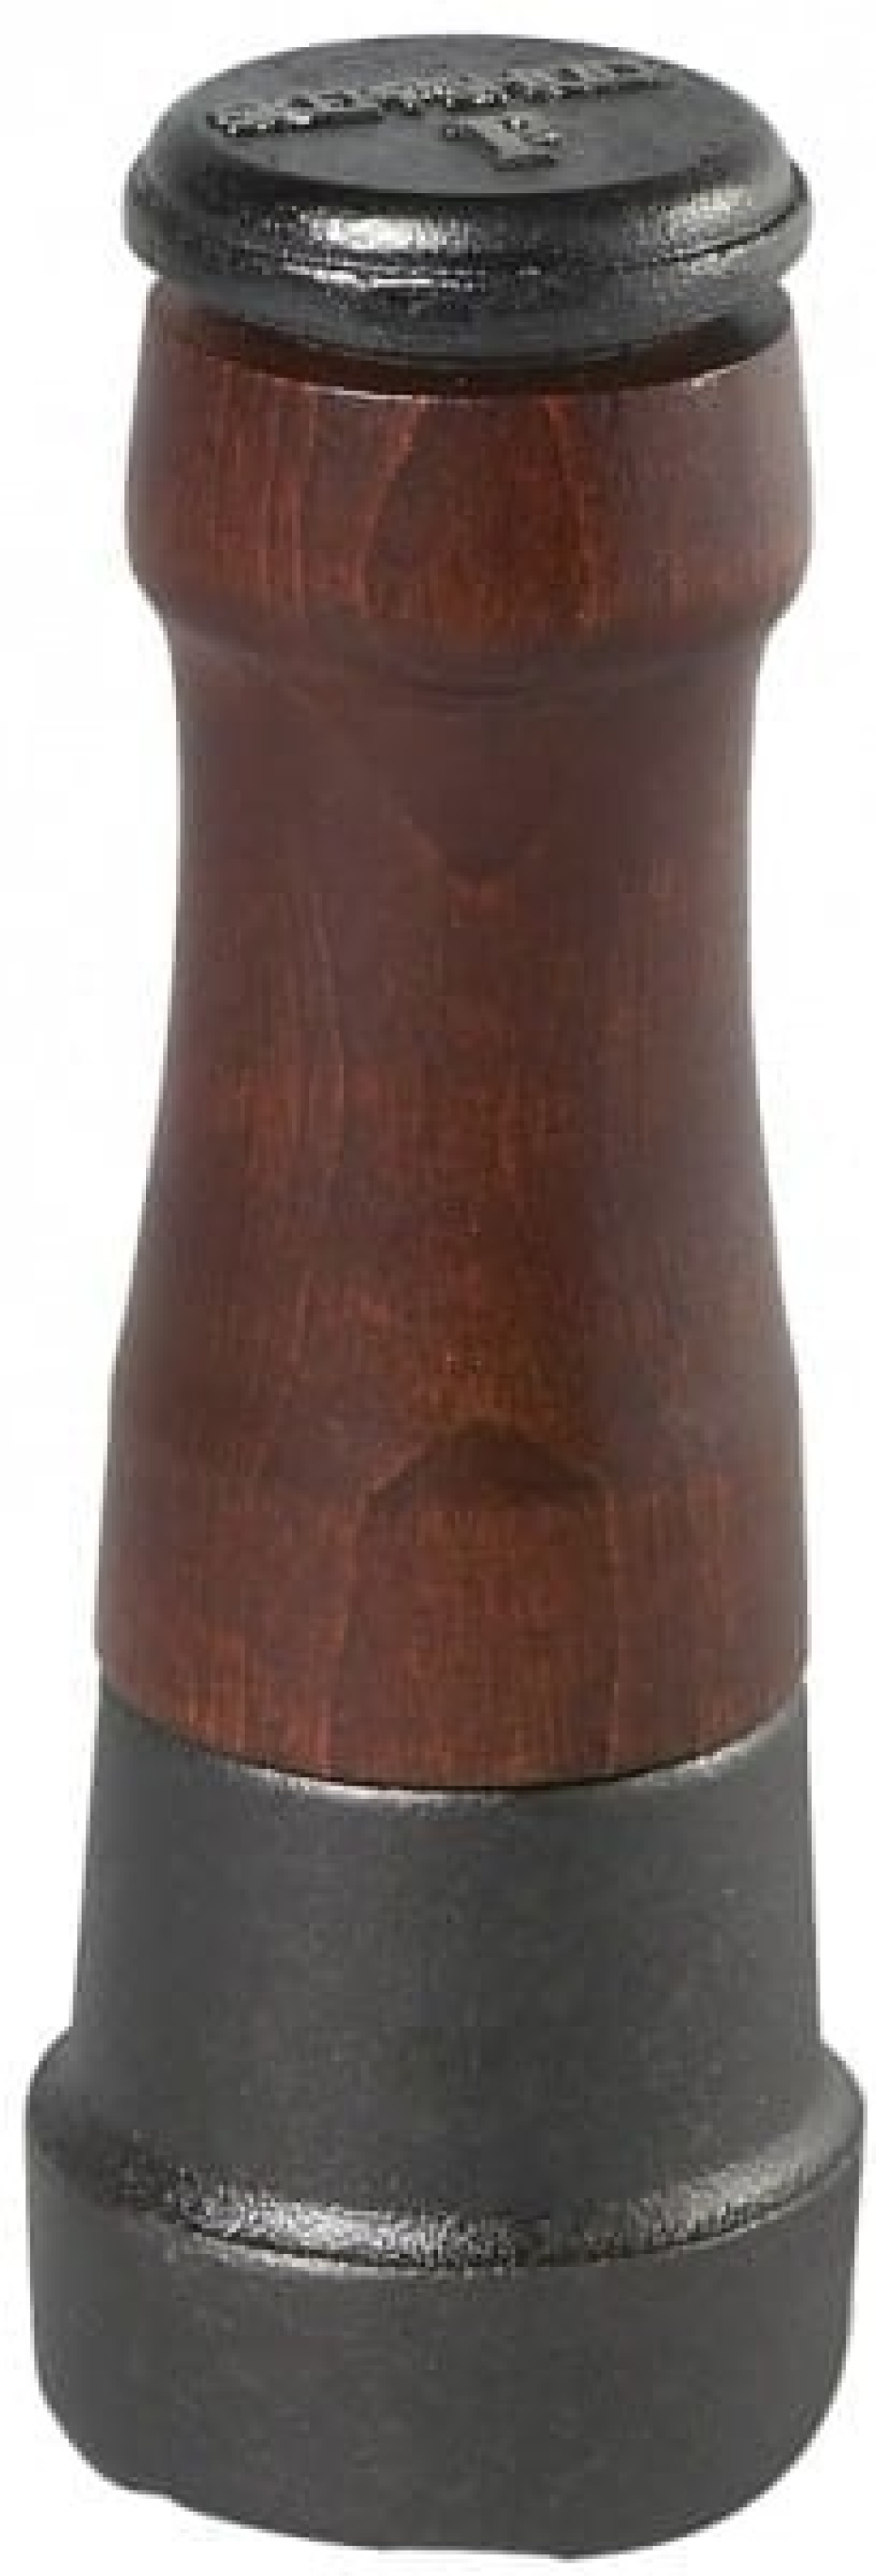 Skeppshult pepparkvarn, 18 cm, Brunbok i gruppen Matlagning / Köksredskap / Salt- & pepparkvarnar hos KitchenLab (1146-13181)